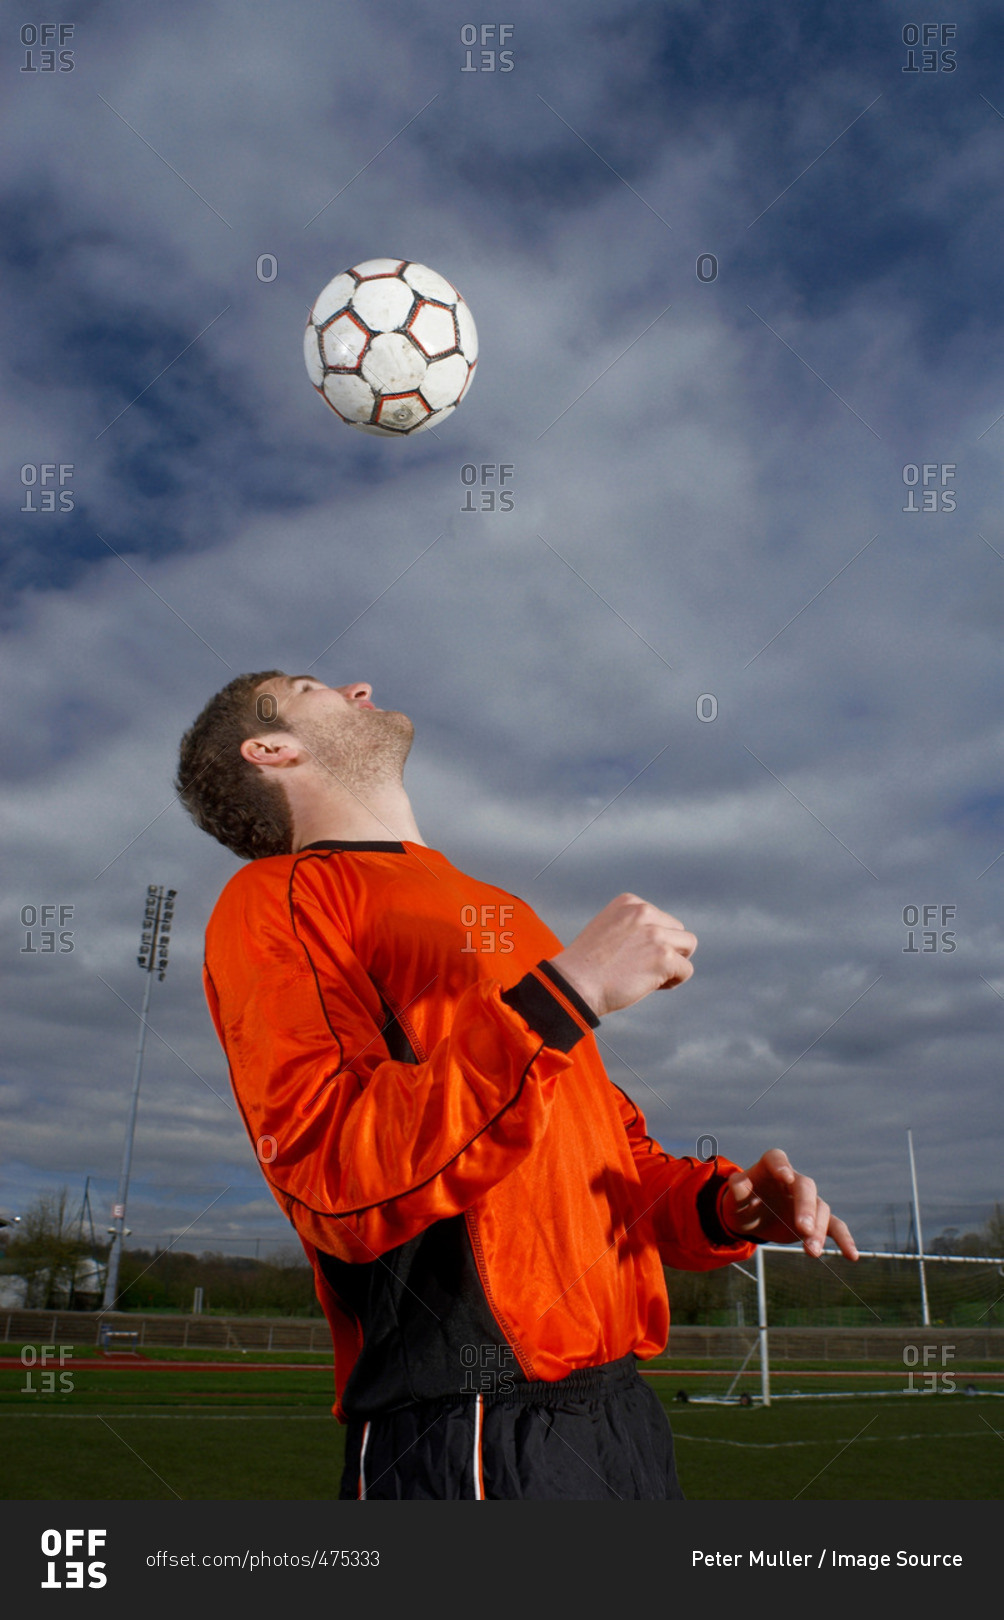 footballer heading a ball to himself